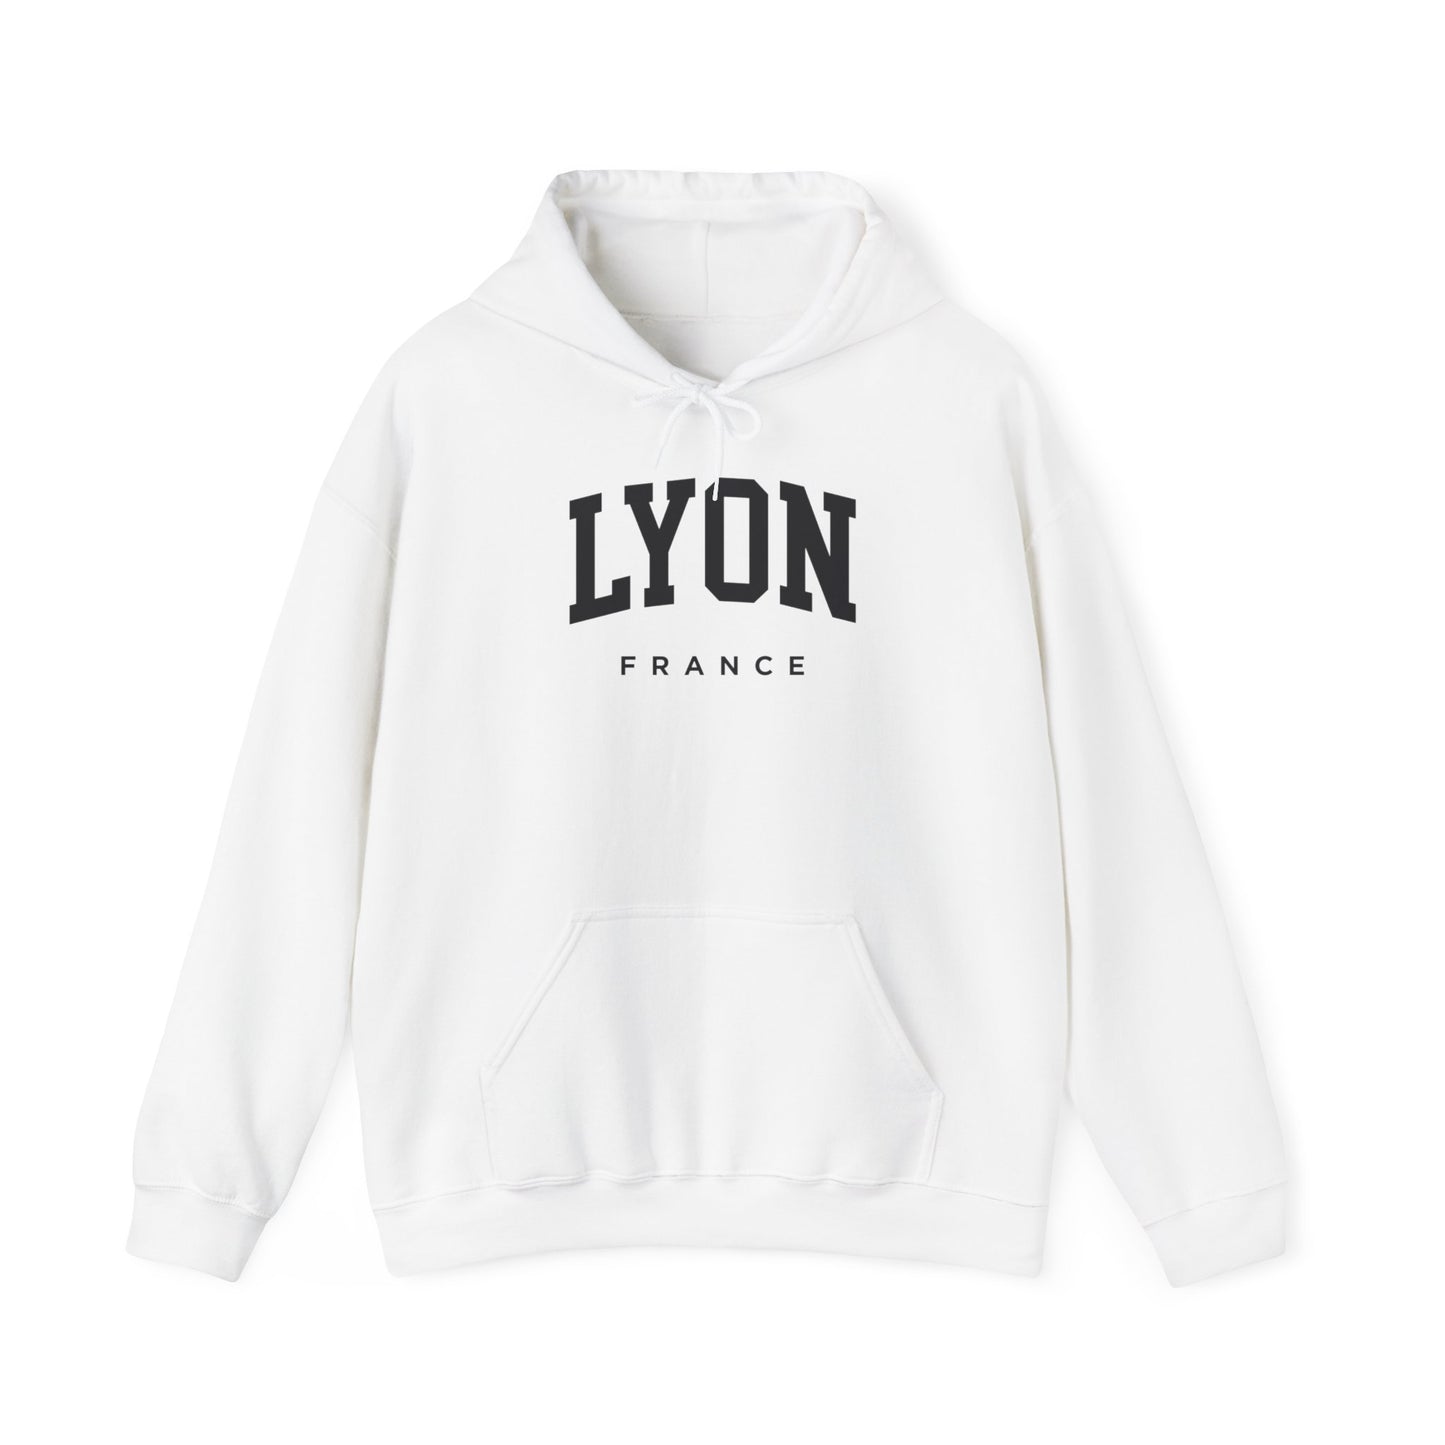 Lyon France Hoodie